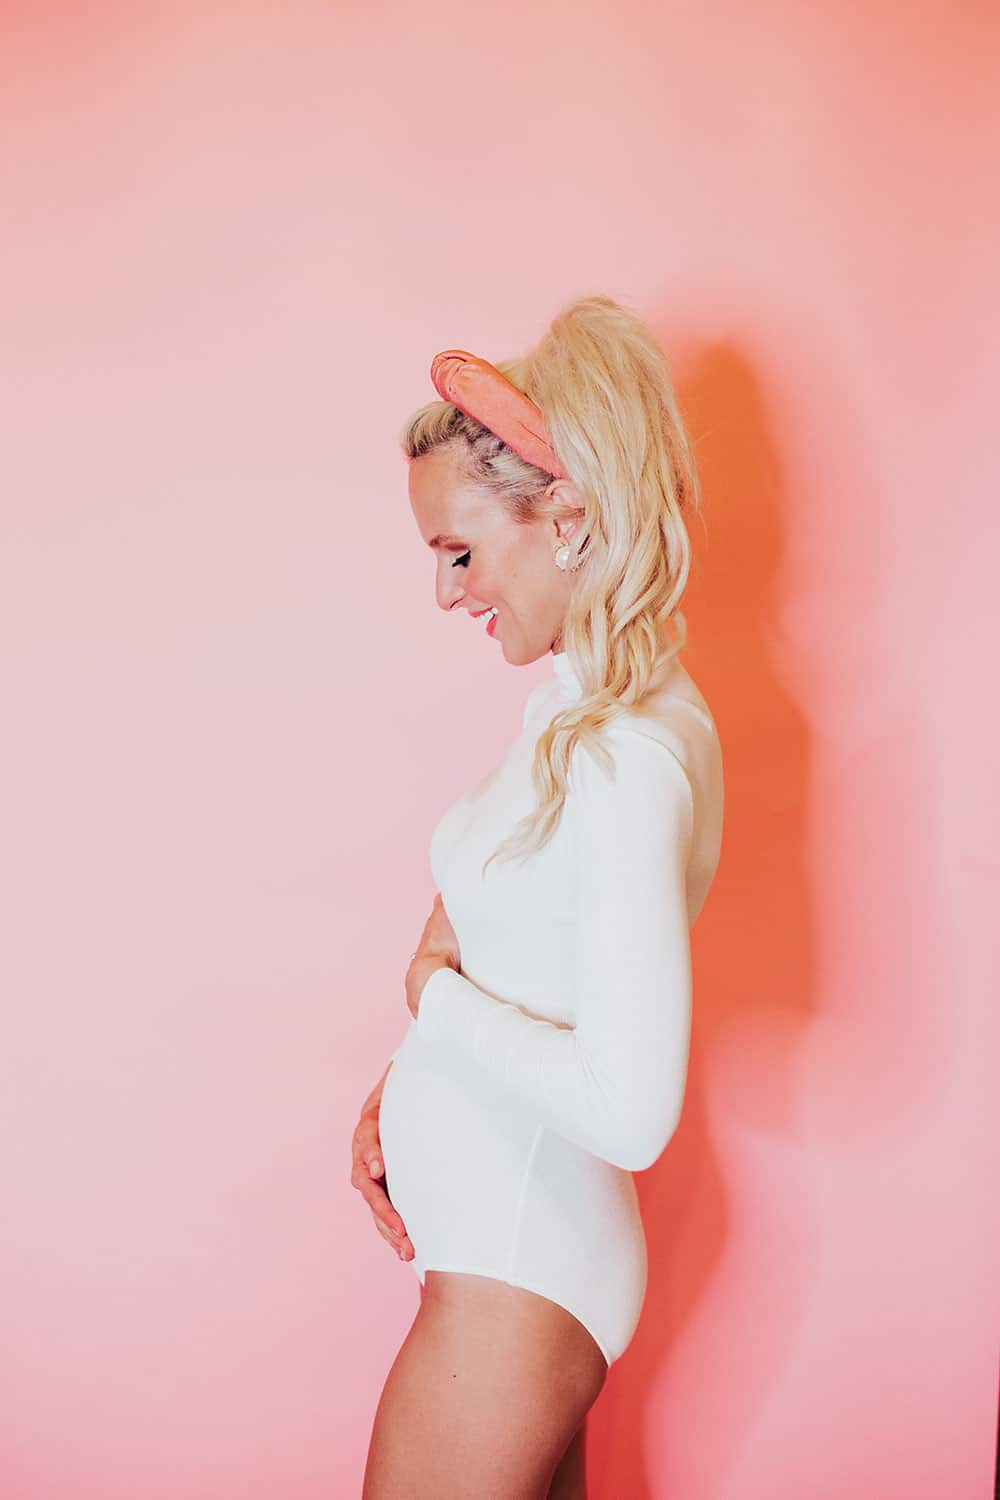 early pregnancy symptoms by week - first trimester - pregnancy bump photos